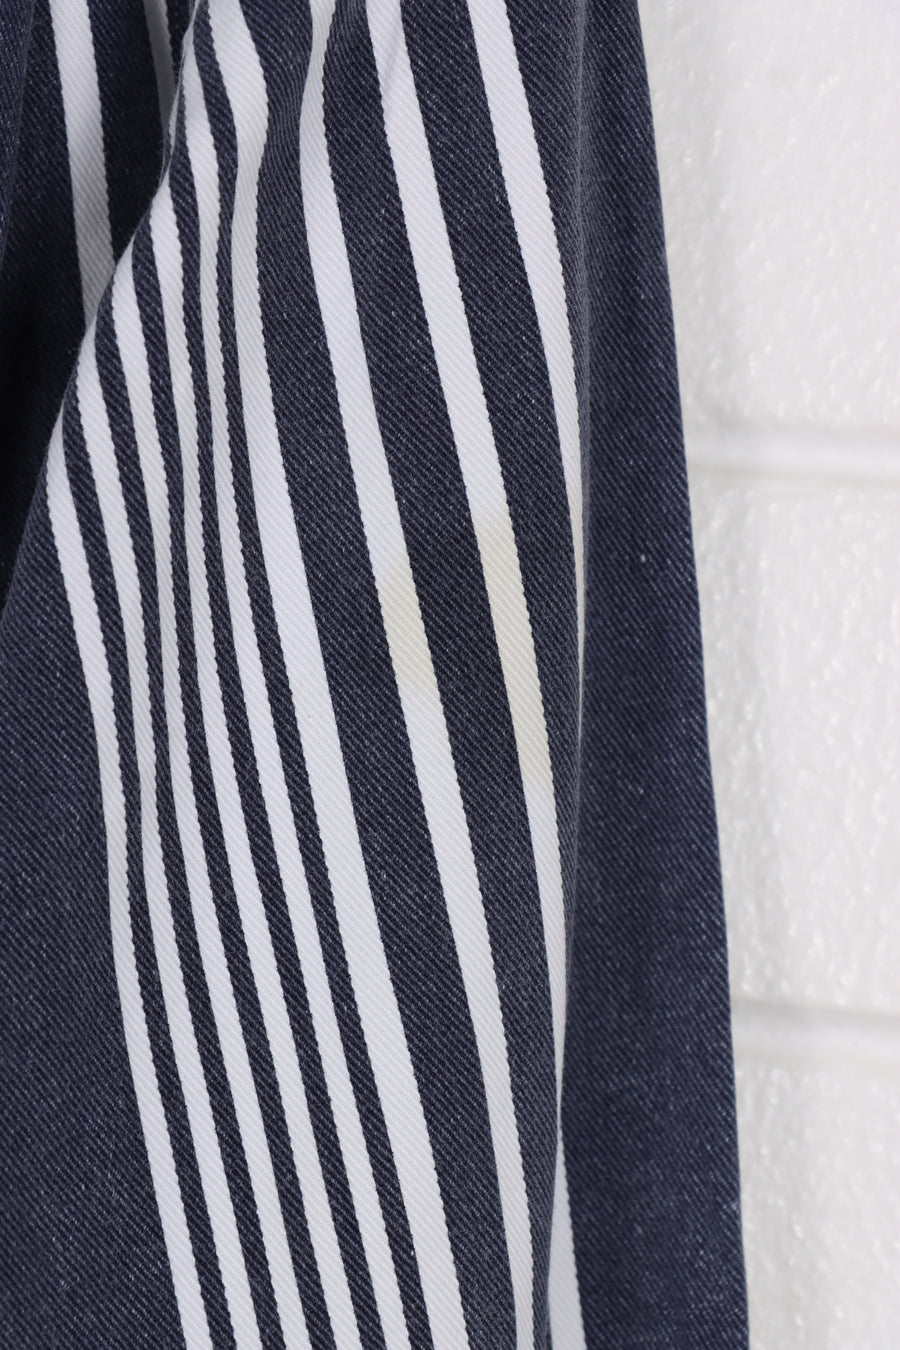 Vintage GAP 90's Black & White Striped Long Sleeve Button Up Shirt (M-L)